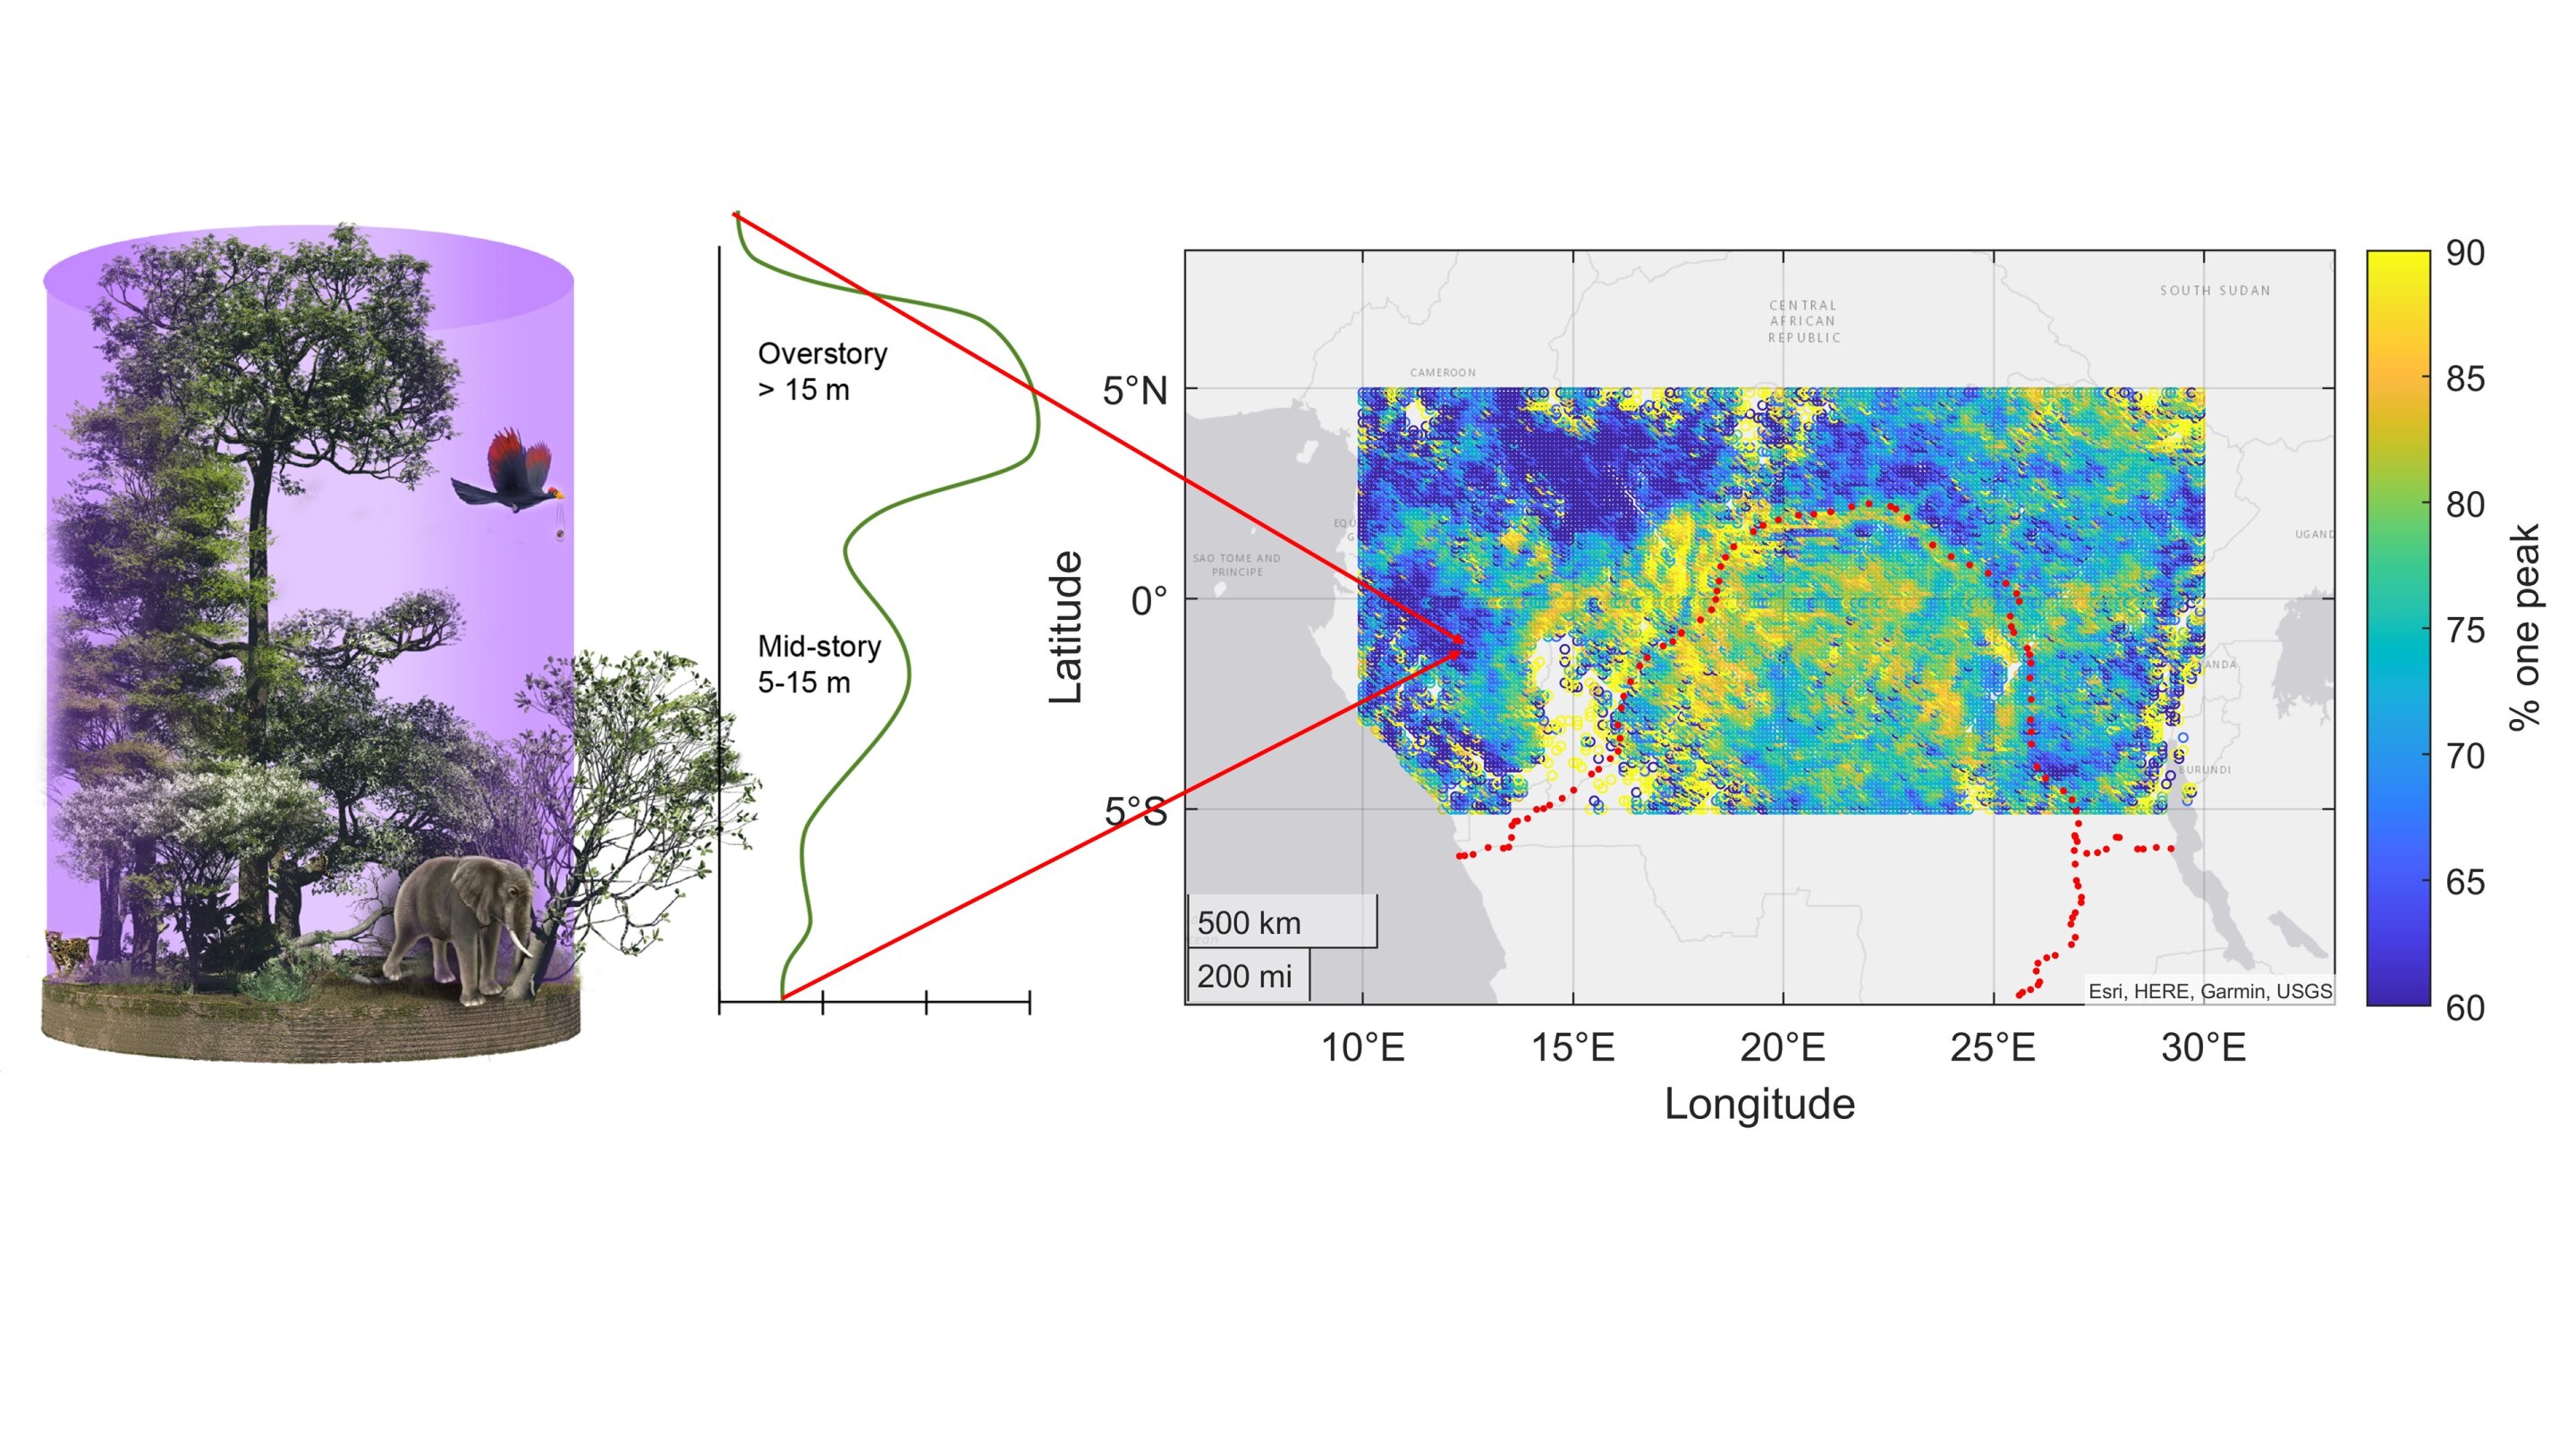 Exploring Tropical Rainforest Stratification Using Space-Based LiDAR